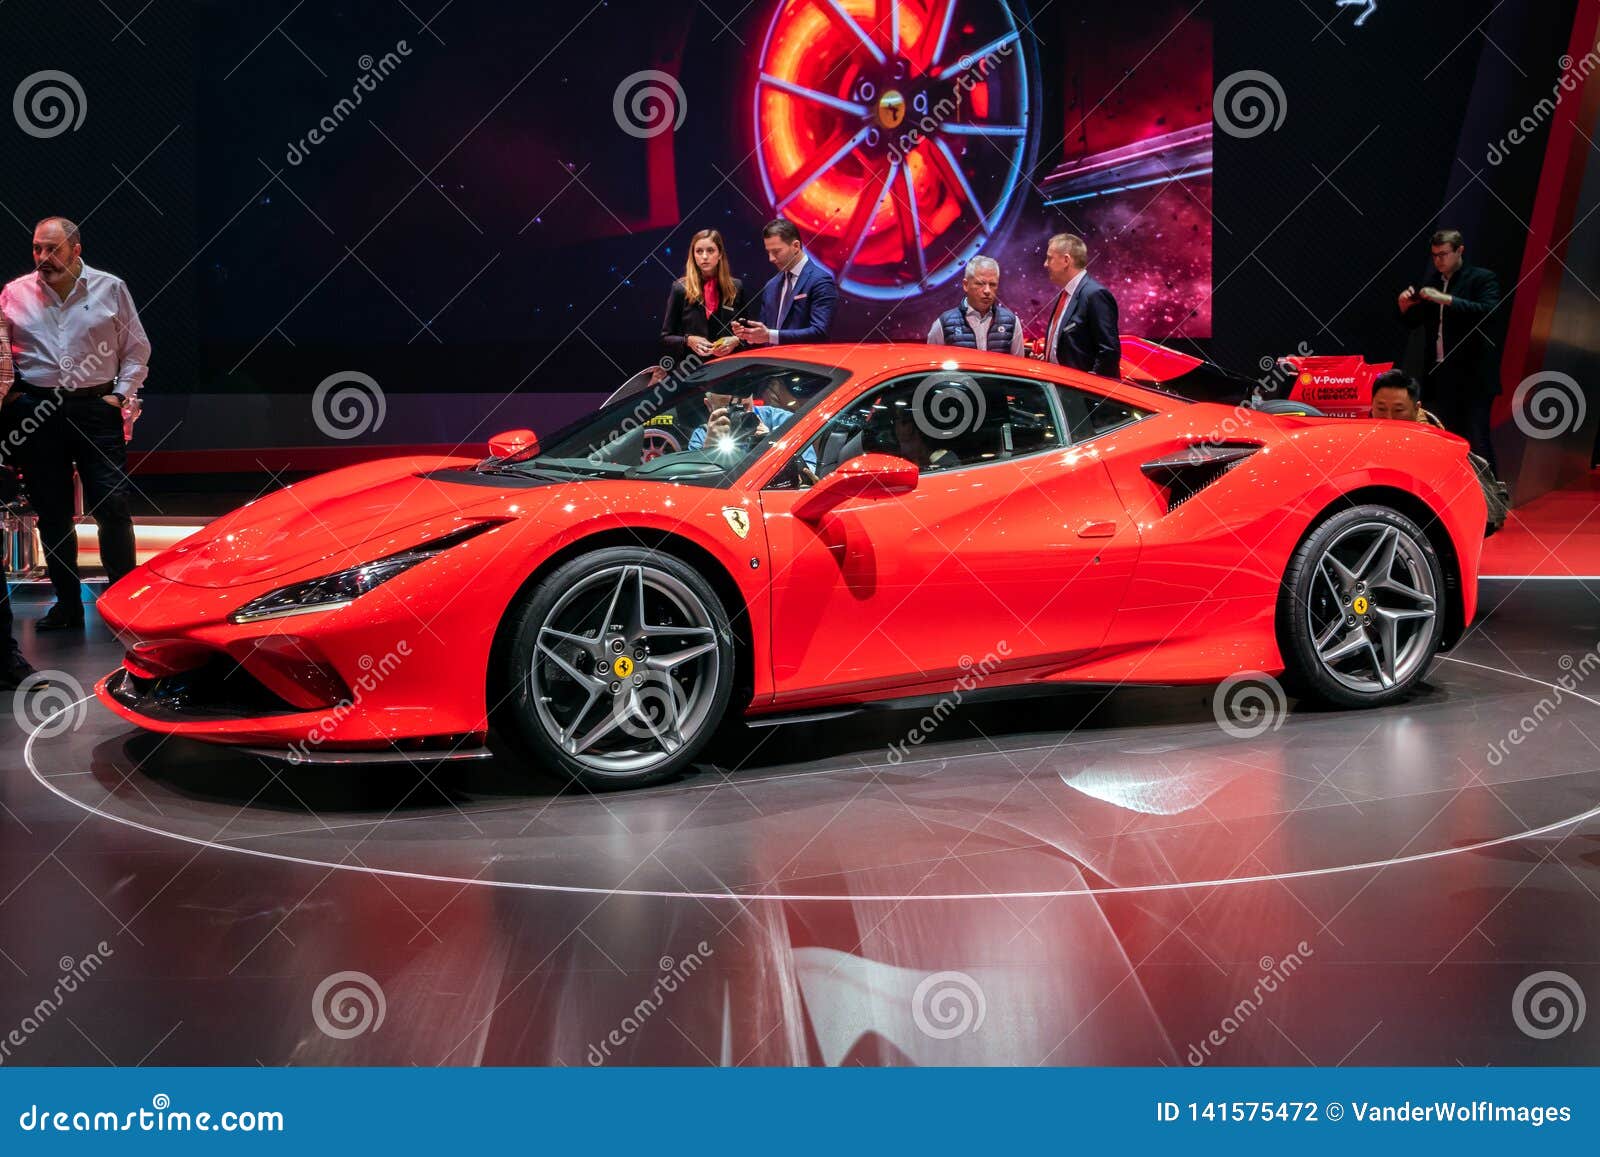 Ferrari F8 Tributo Sports Car Editorial Photography Image